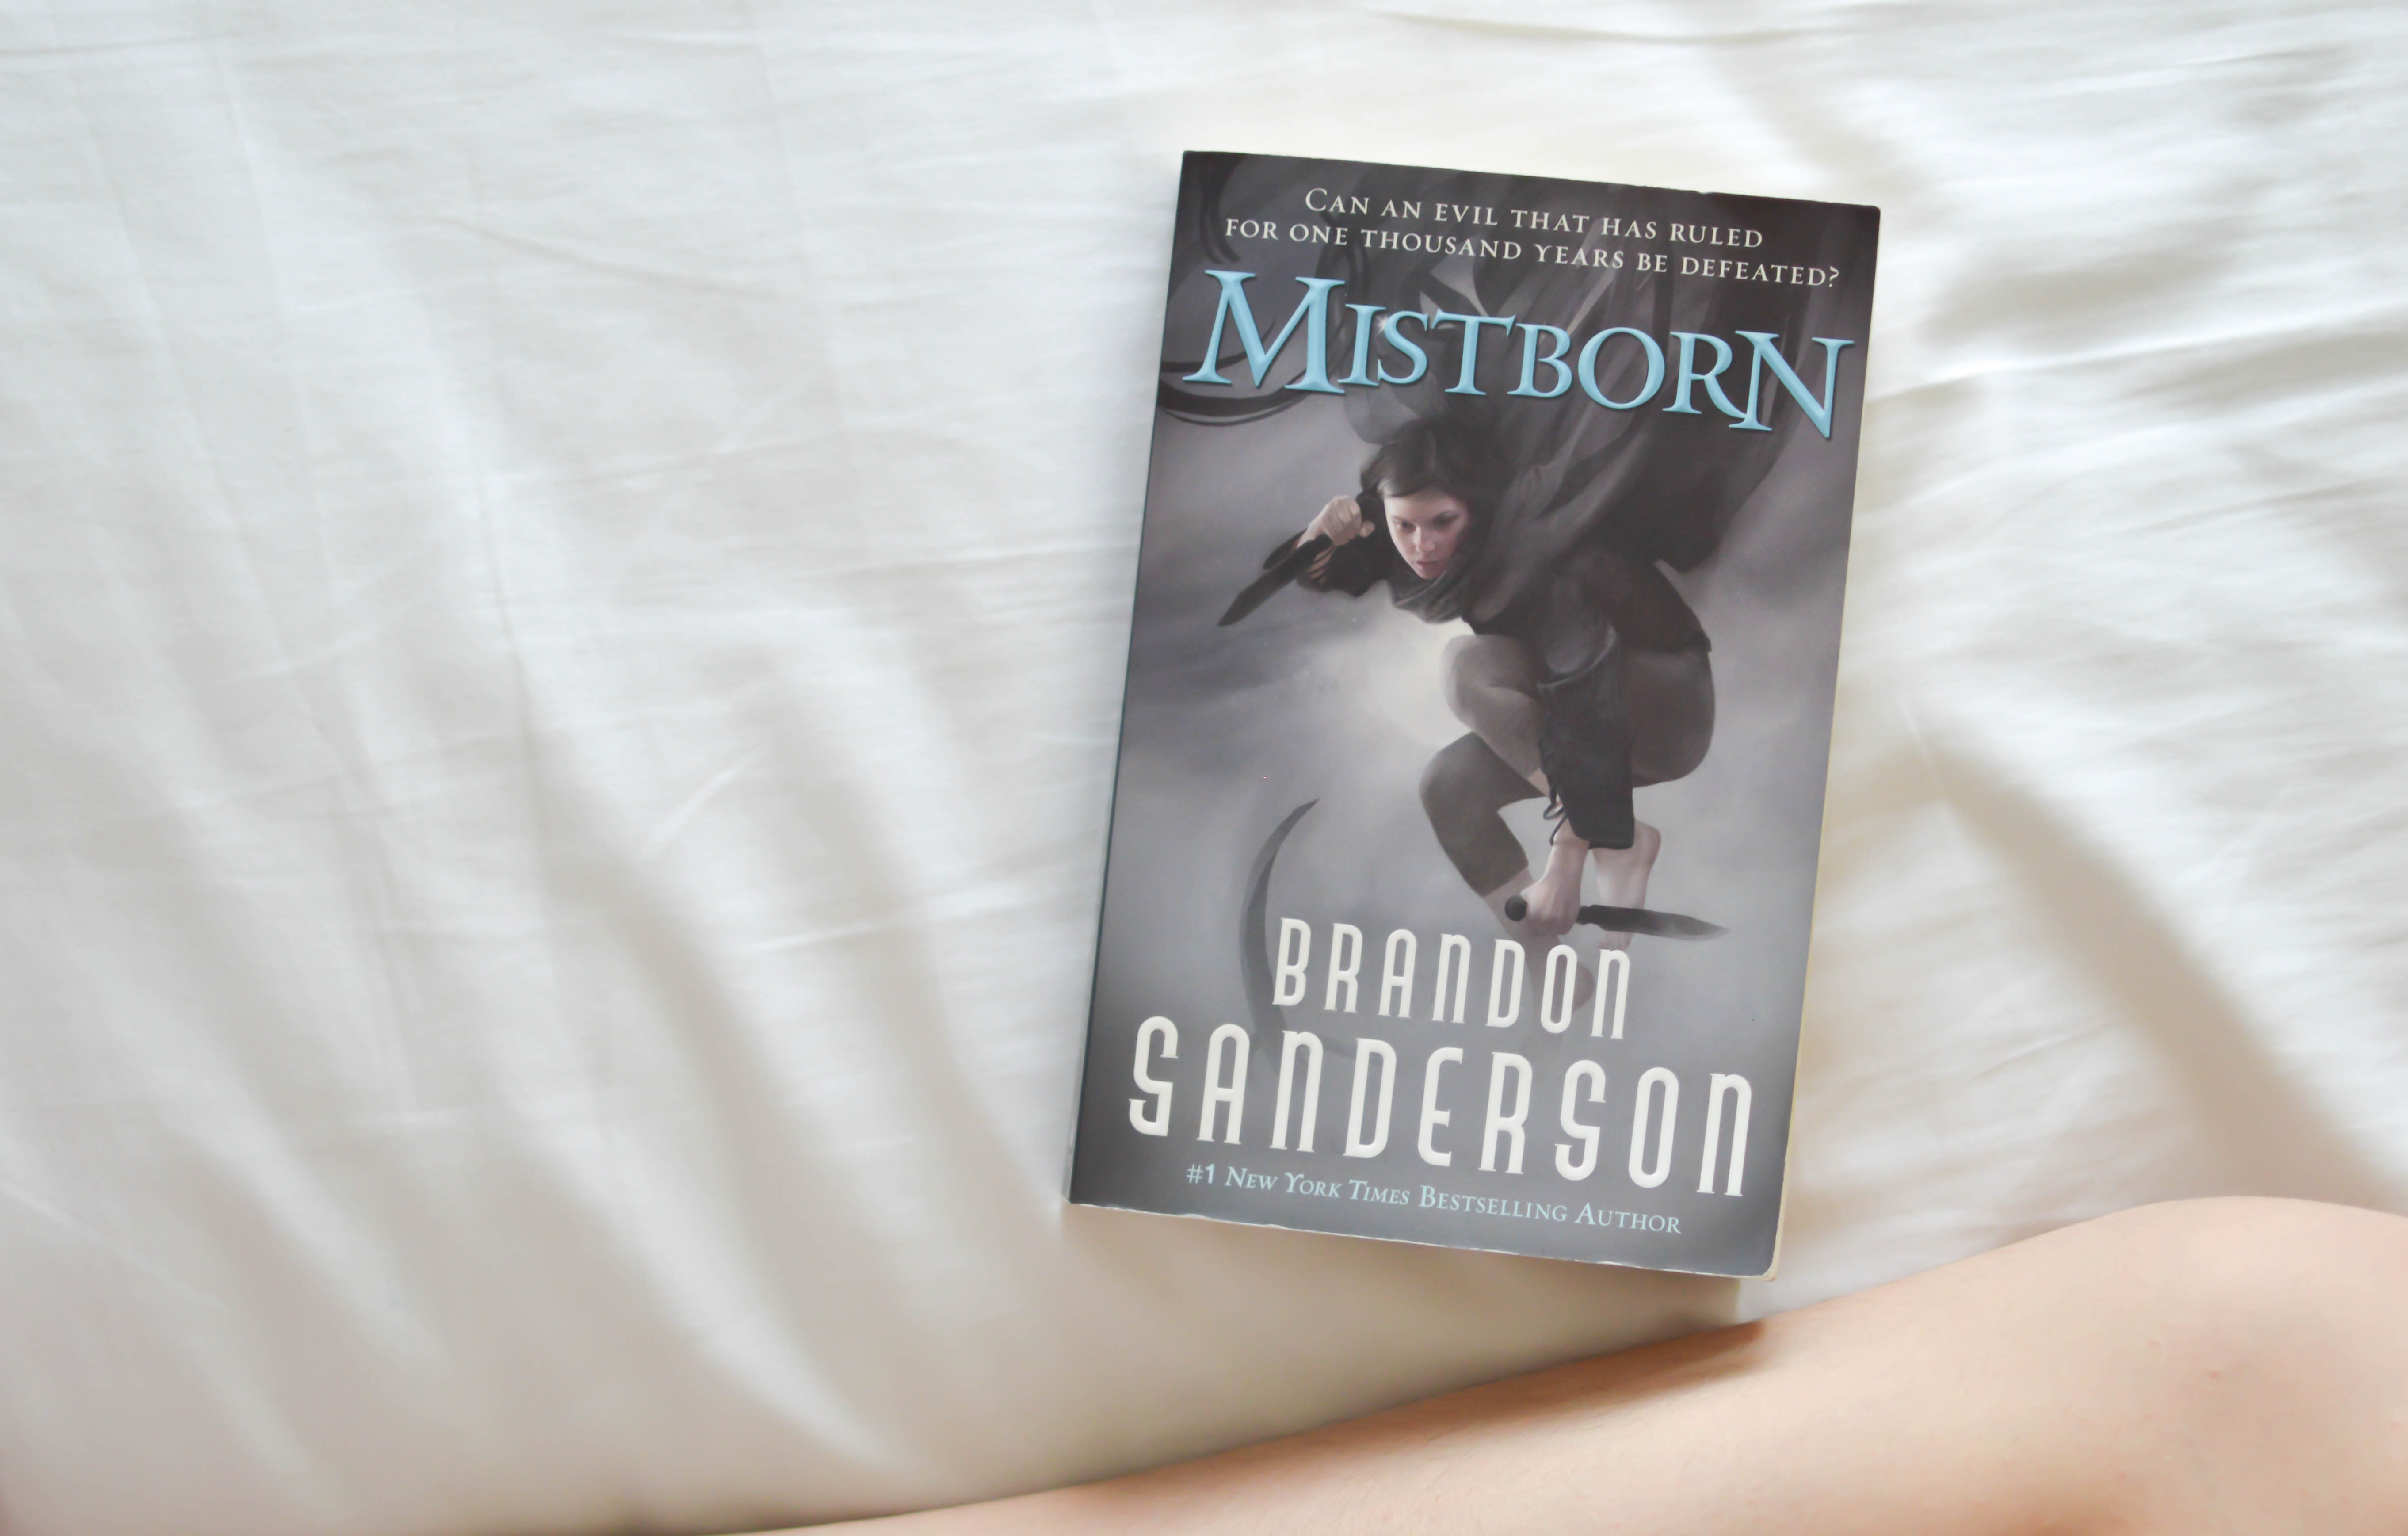 The Final Empire (Mistborn #1) - Brandon Sanderson